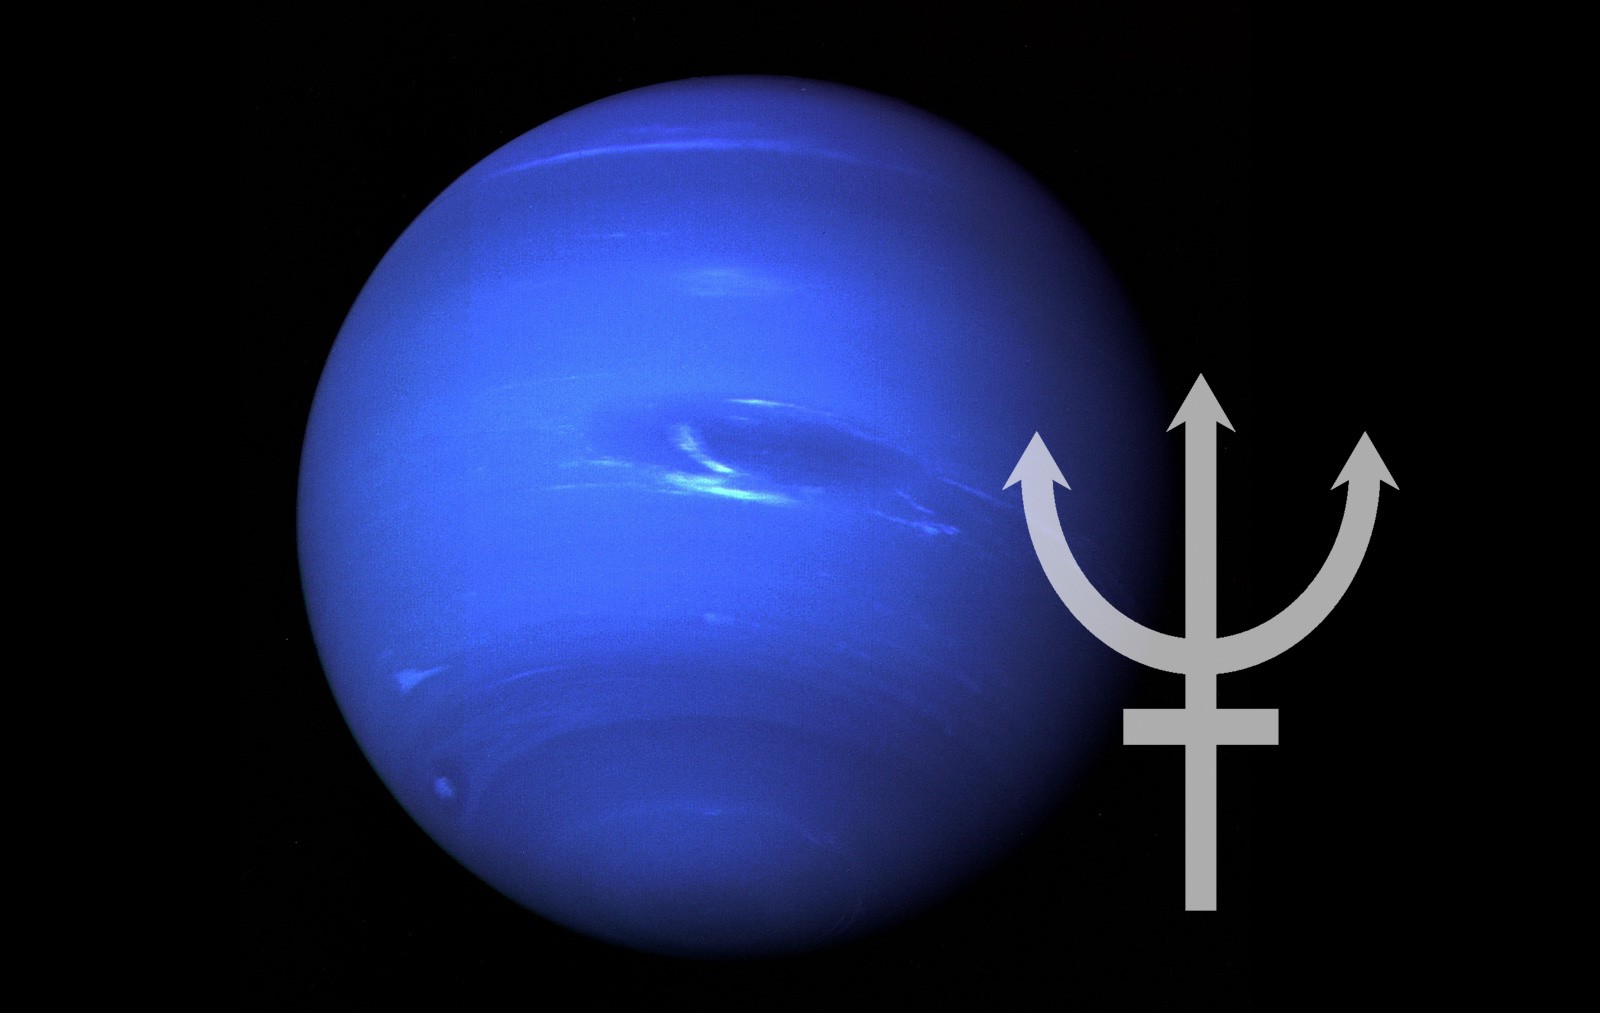 Neptune symbol meaning